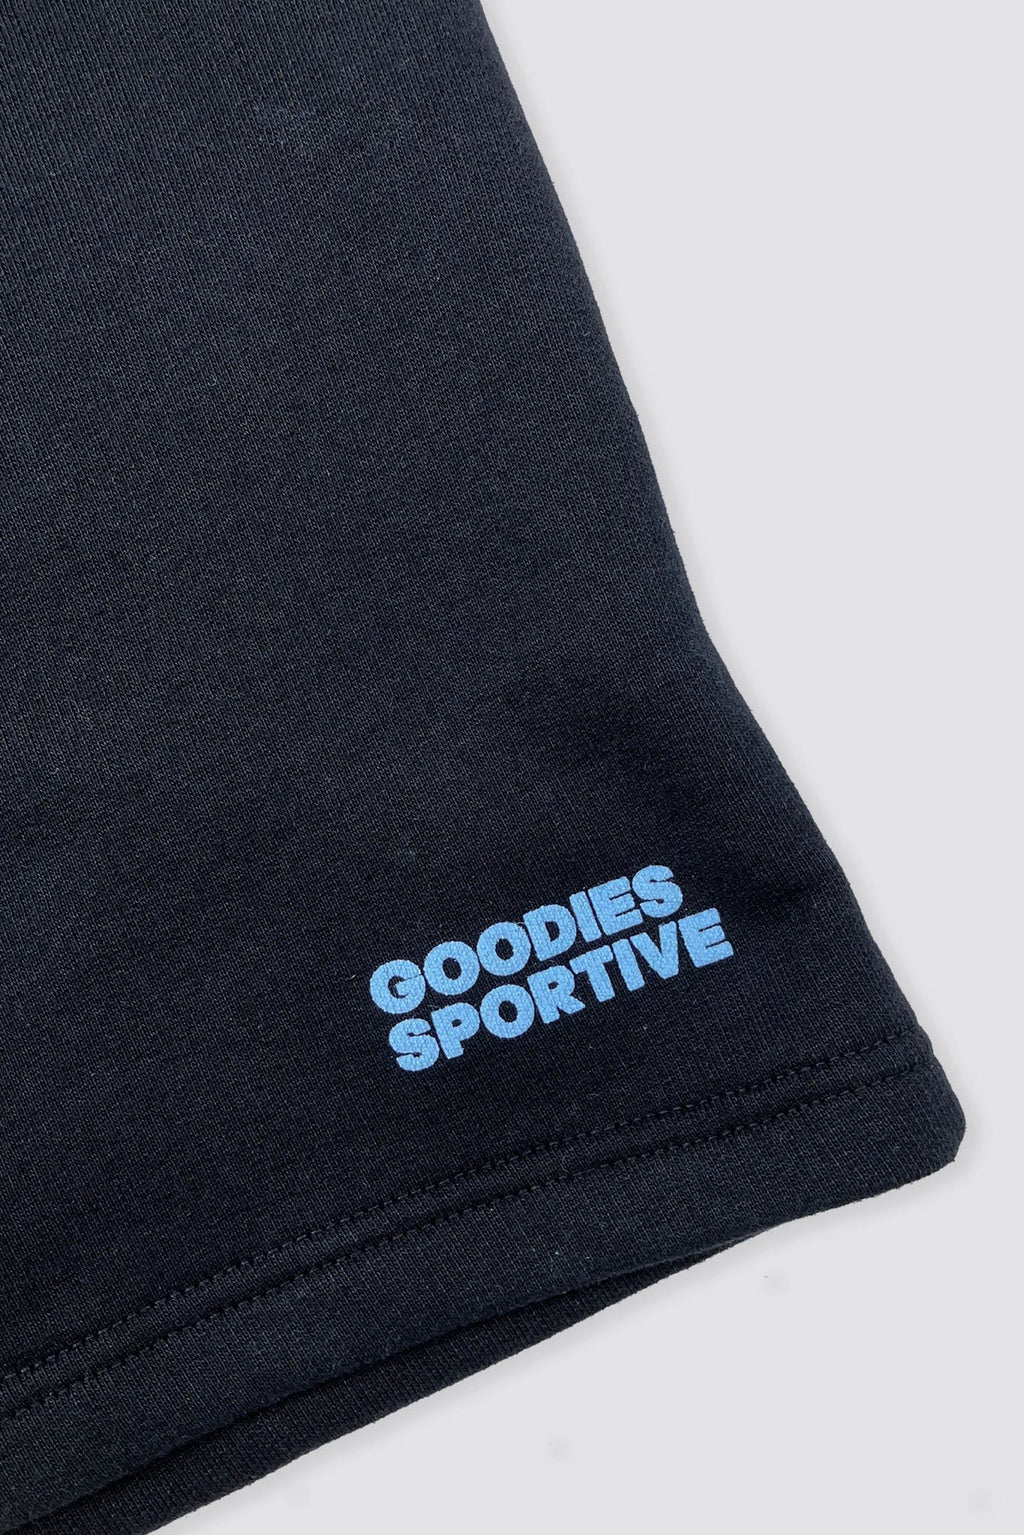 Goodies Sportive - Athleisure  Black Short